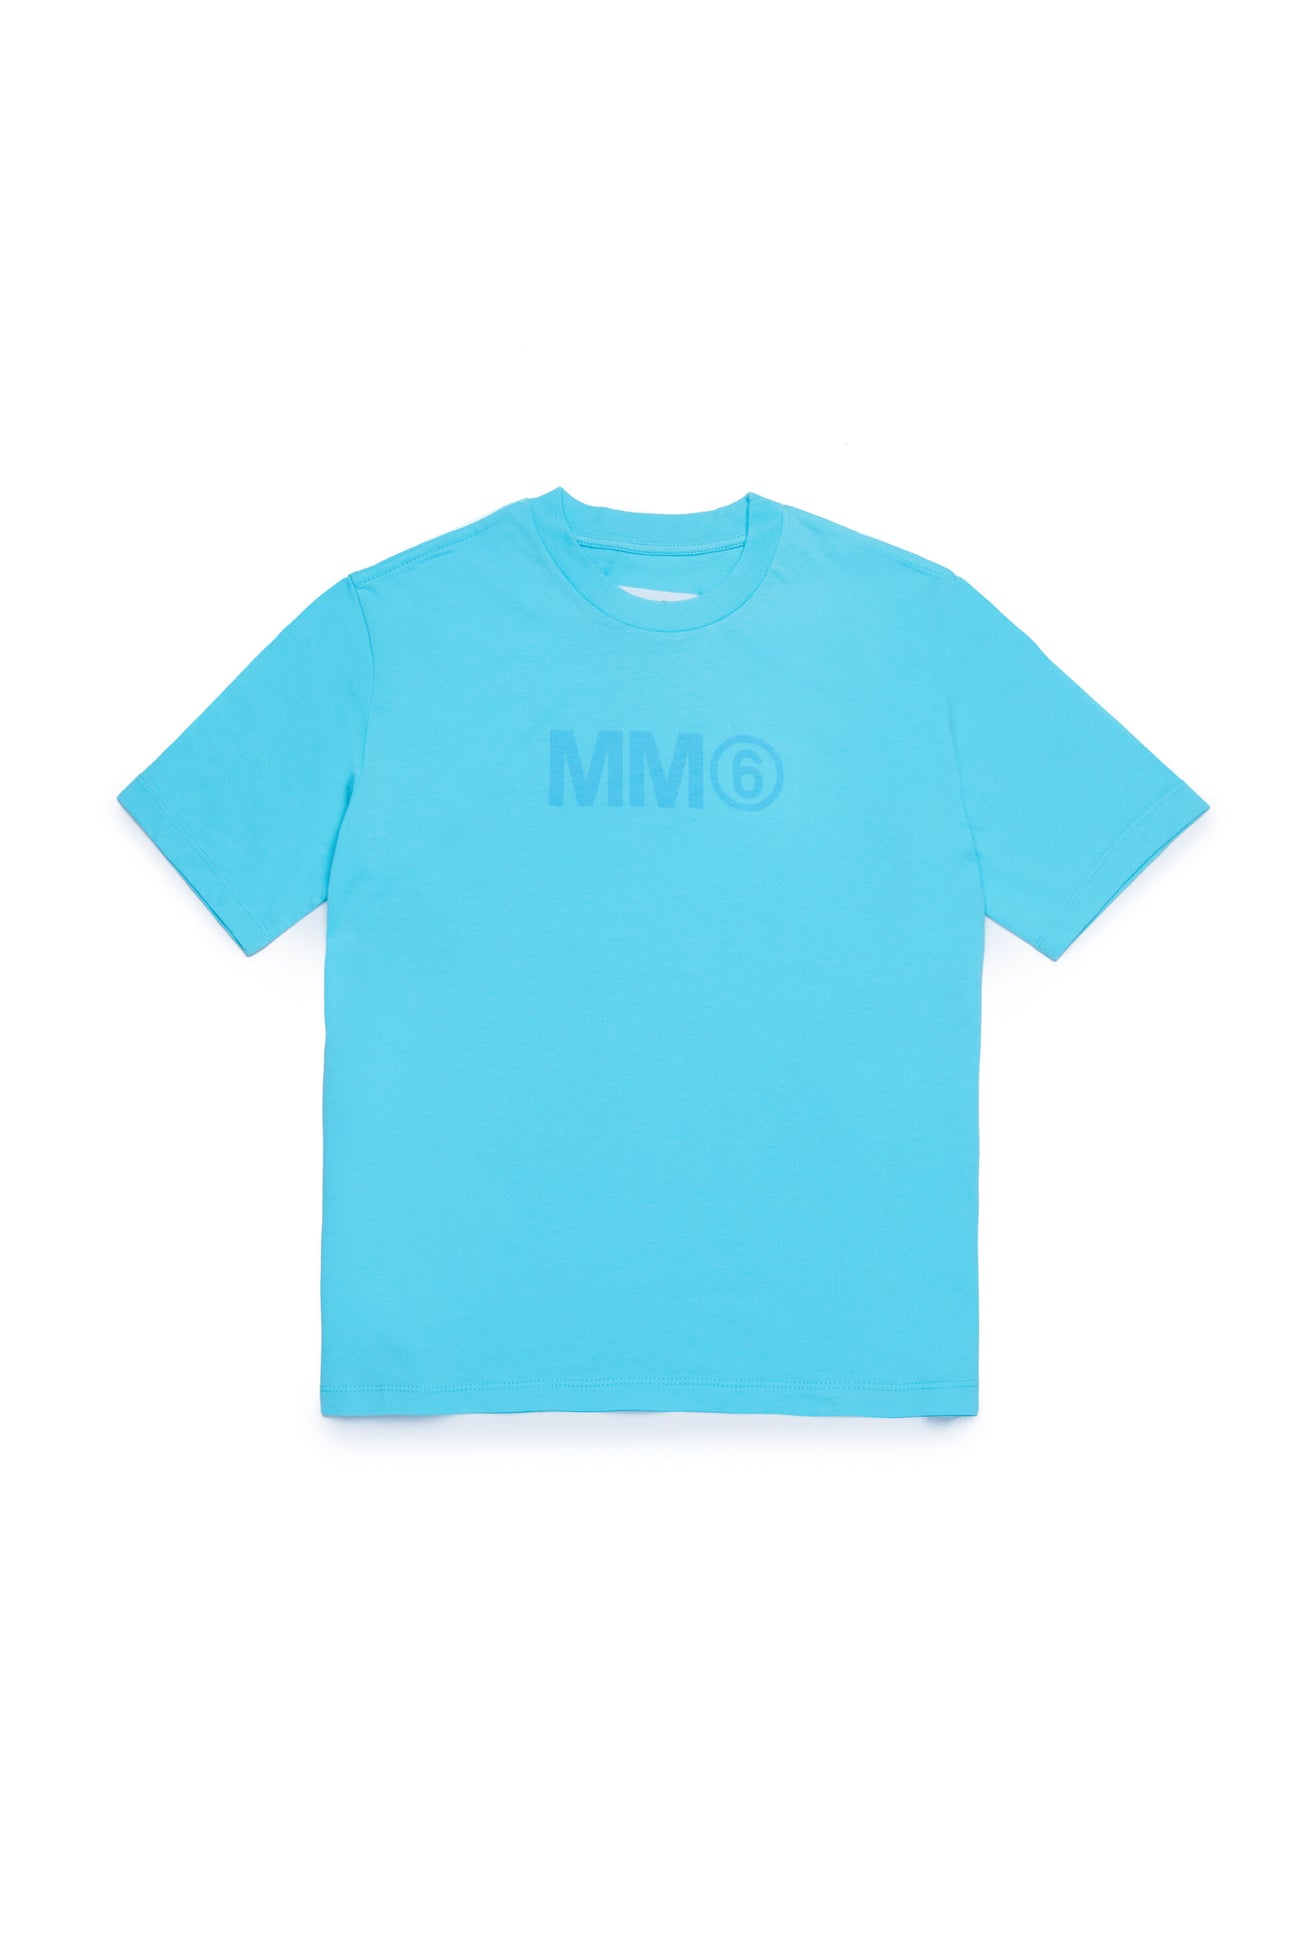 MM6ブランドTシャツ - 3枚セット MM6ブランドTシャツ - 3枚セット